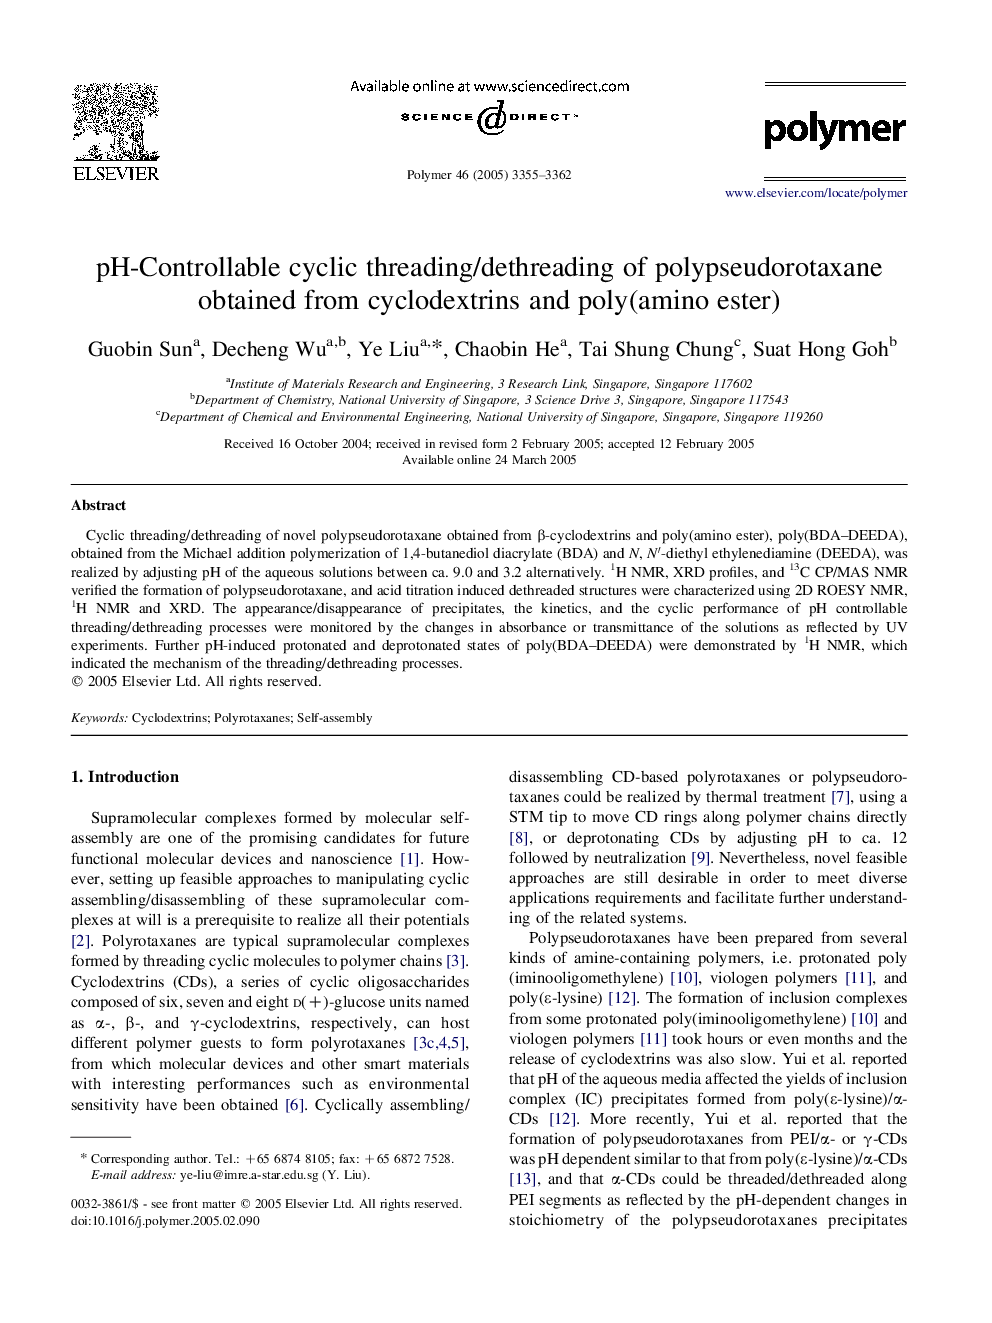 pH-Controllable cyclic threading/dethreading of polypseudorotaxane obtained from cyclodextrins and poly(amino ester)